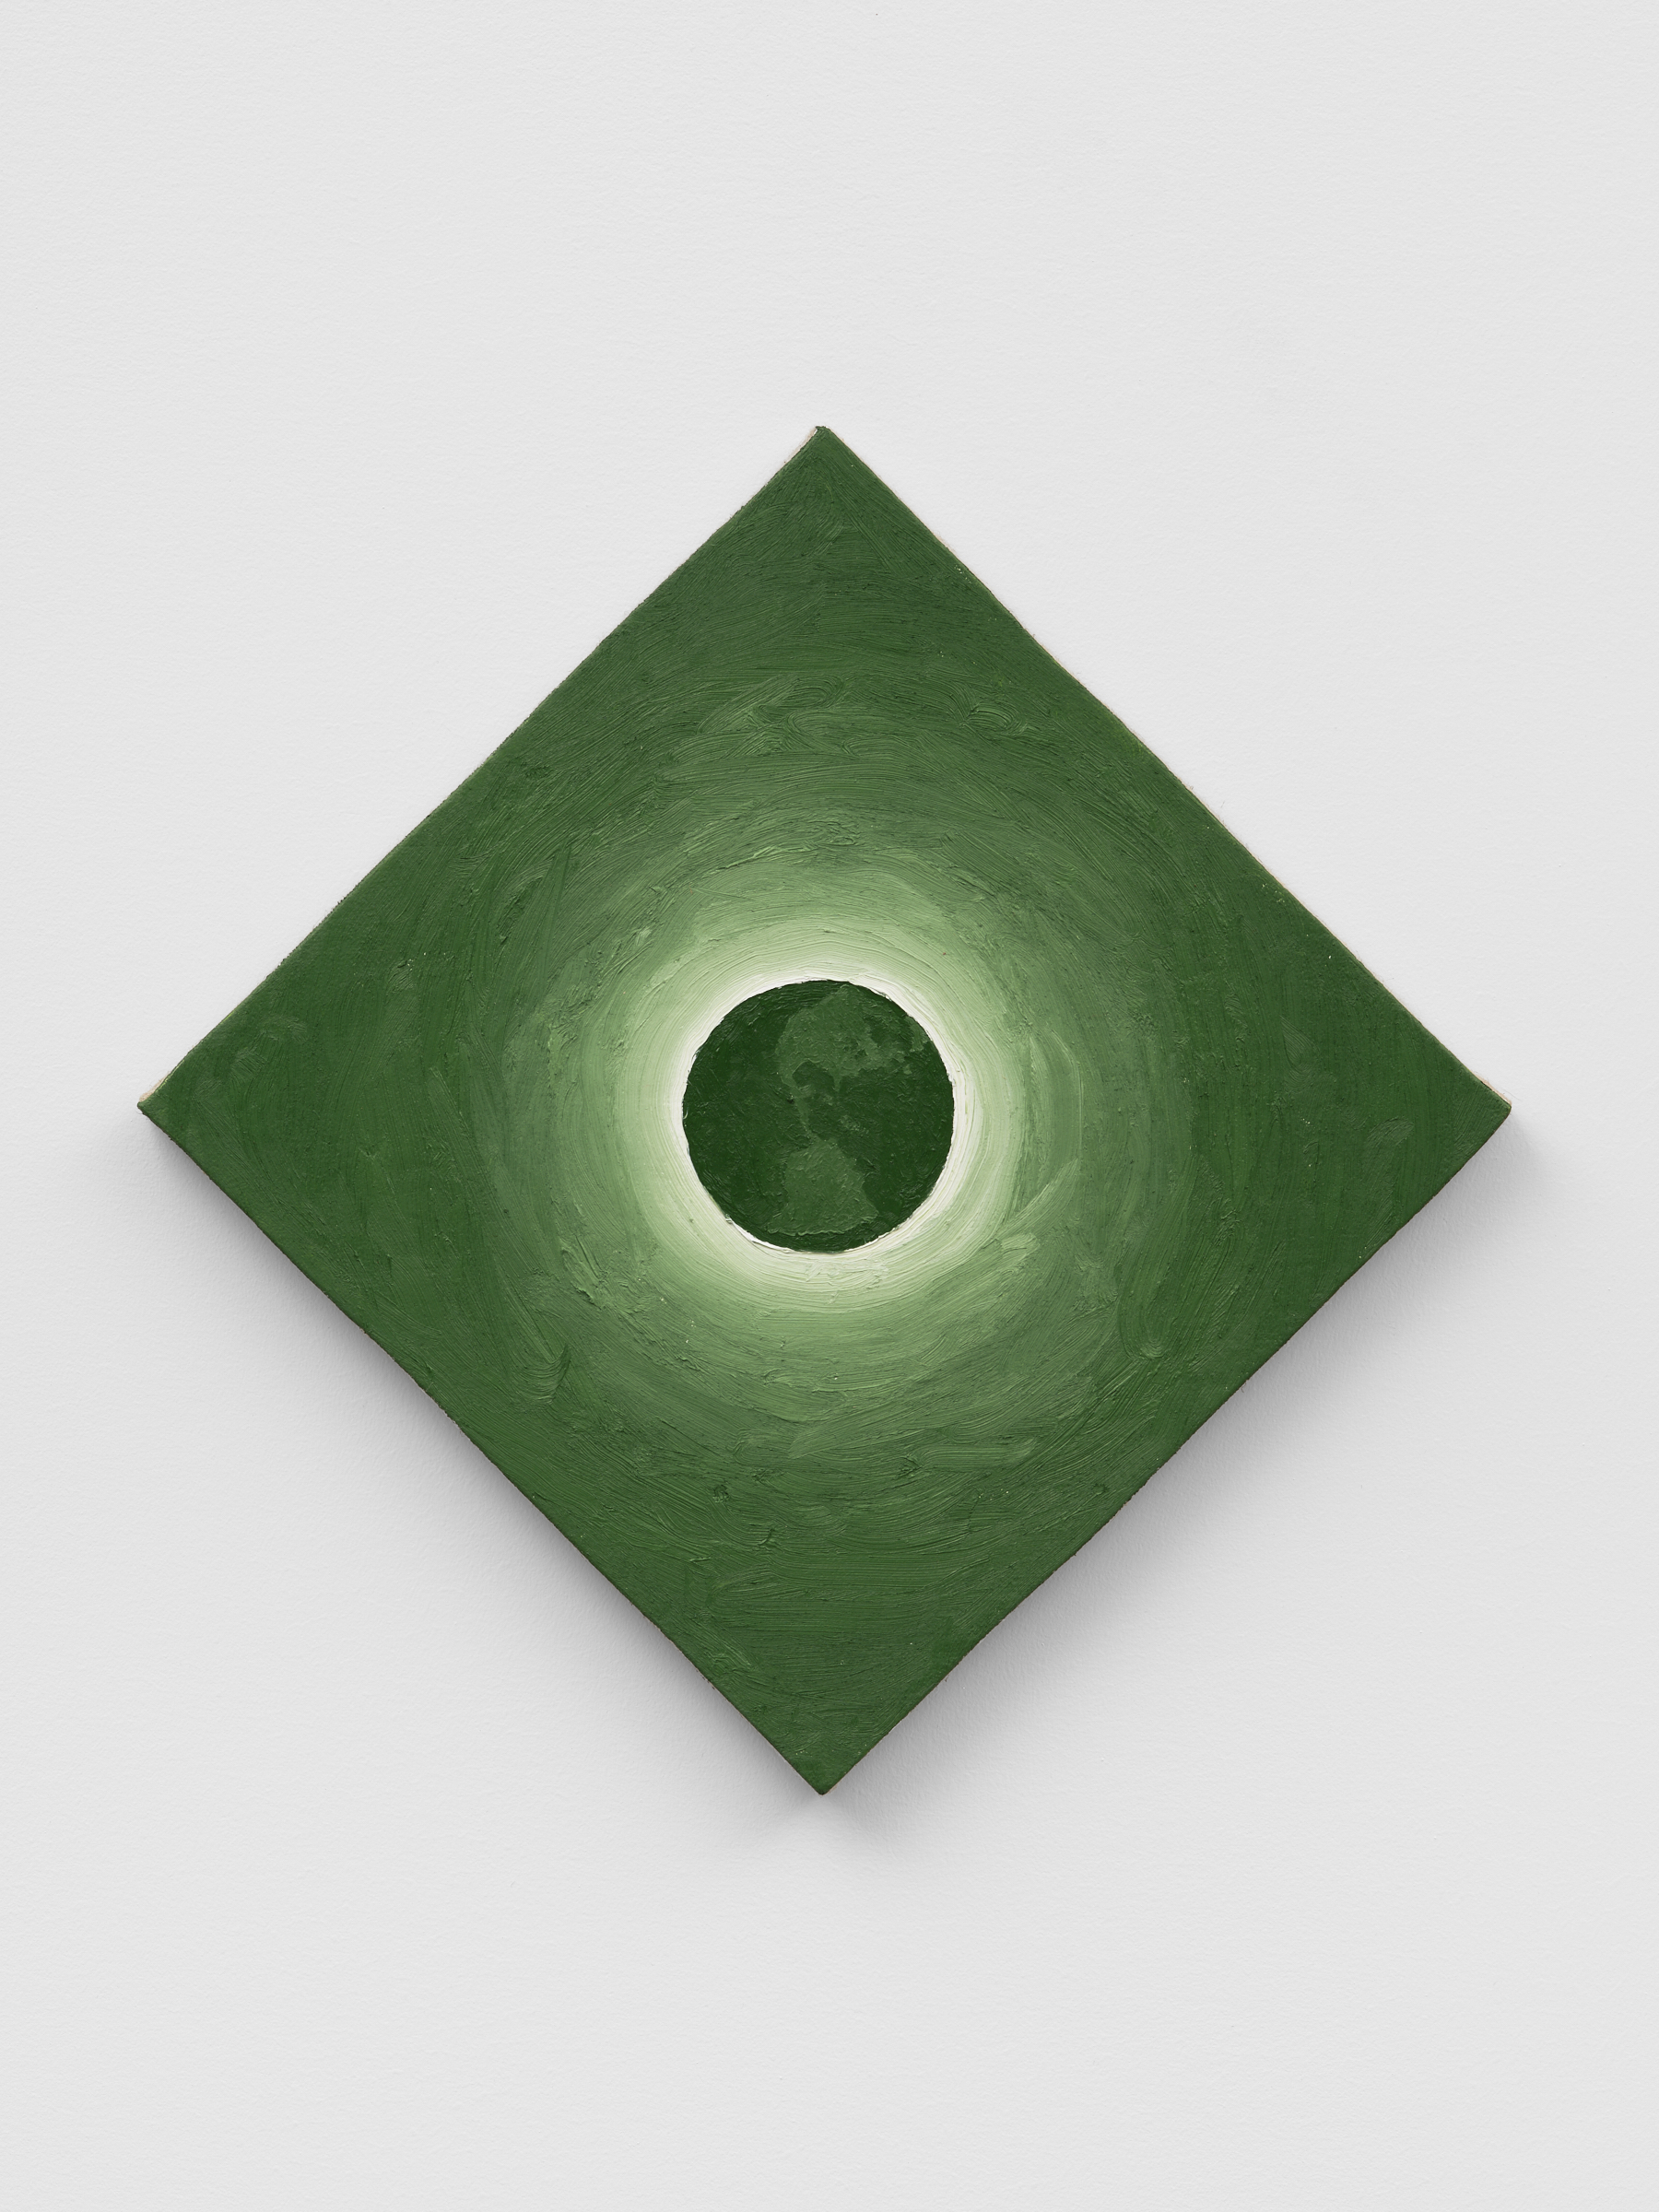 Alex Kwartler, Eclipse (Green), 2022, Oil on linen, 16 x 16 in.